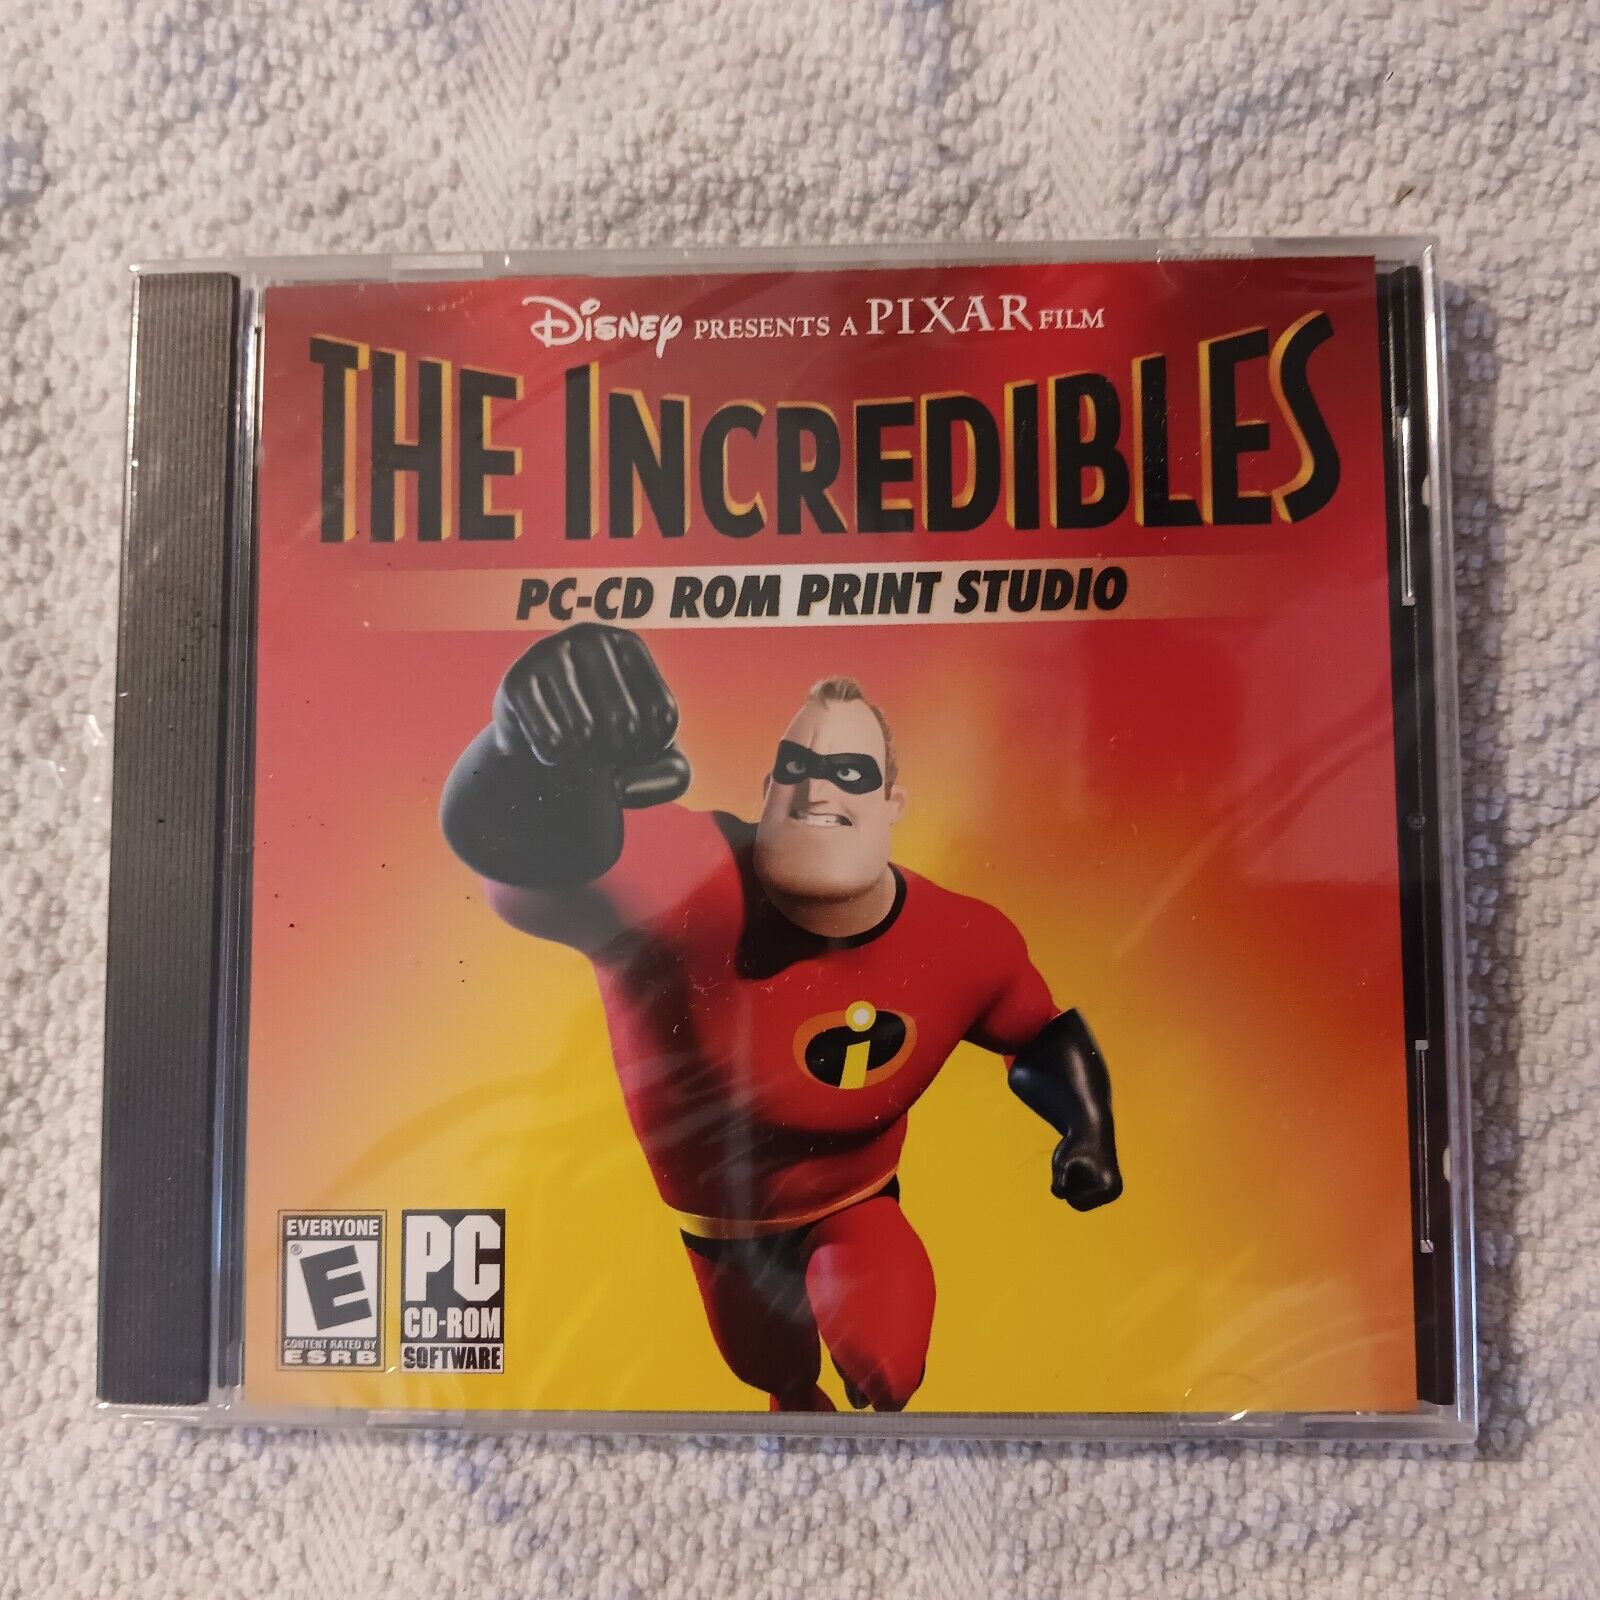 The Incredibles PC CD-ROM Print Studio Disney Pixar Windows 98/Me/XP Game Sealed